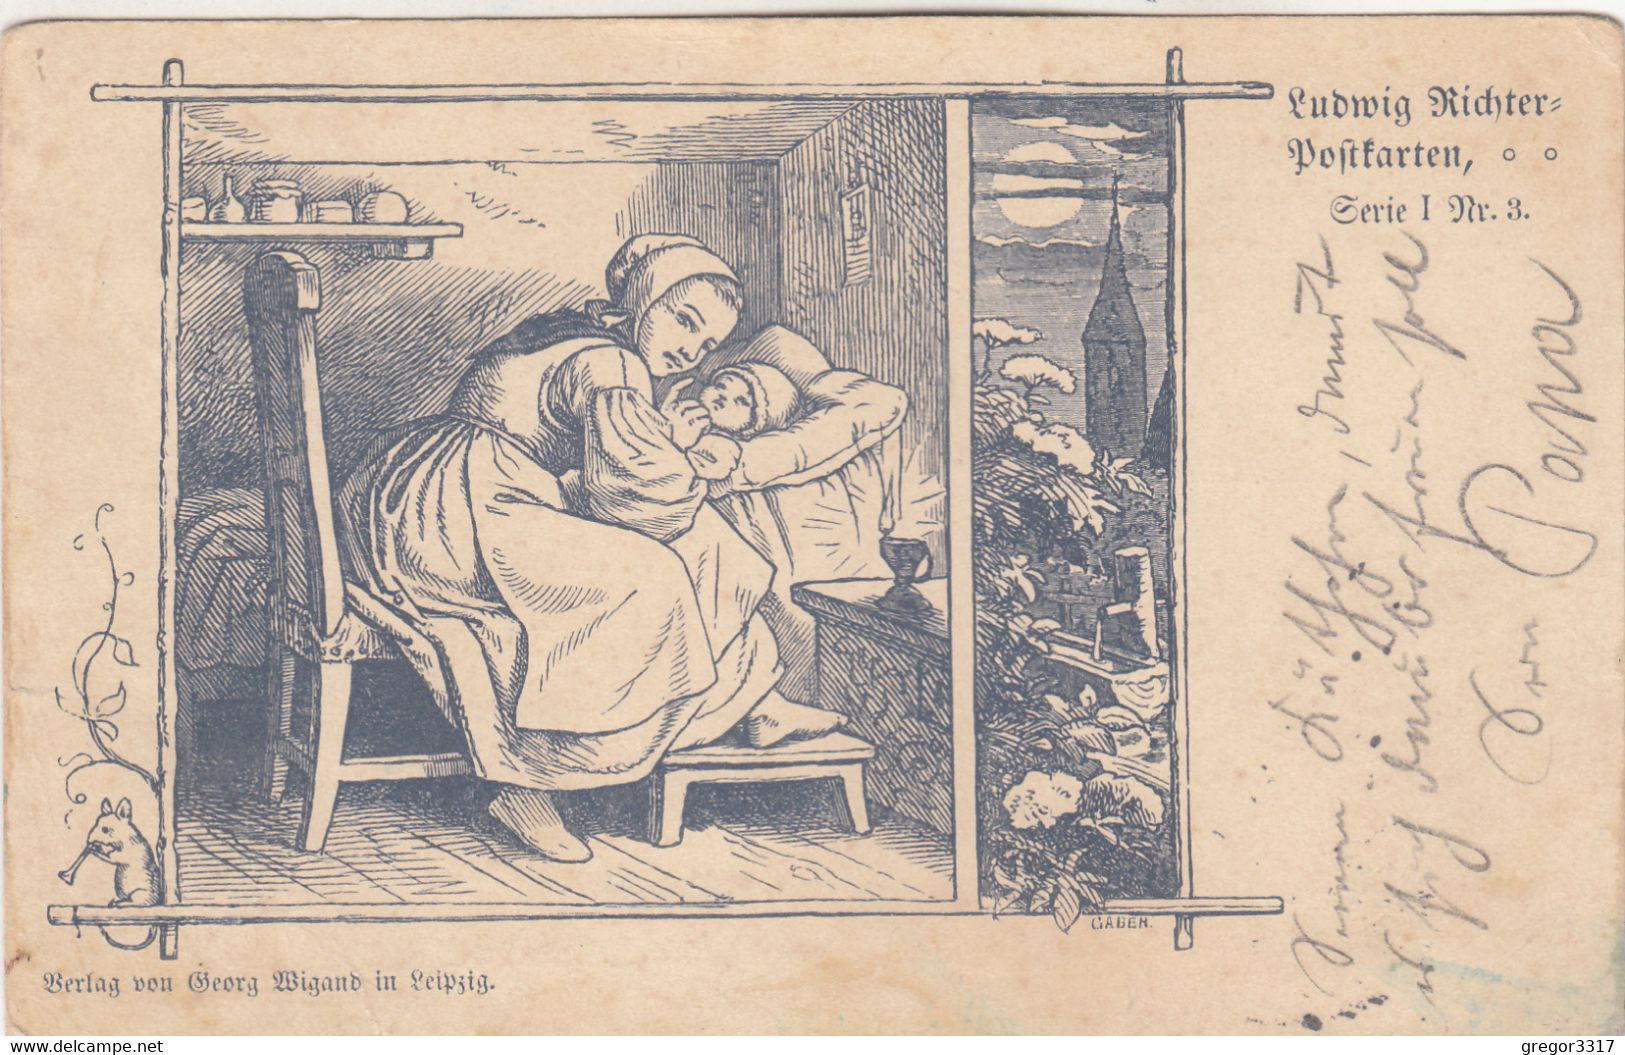 B1457) LUDWIG RICHTER Postkarten Serie 1 Nr. 3 - Mutter Kind In Der Nacht Beim Bett - Dt. Städteausstellung DRESDEN 1903 - Richter, Ludwig